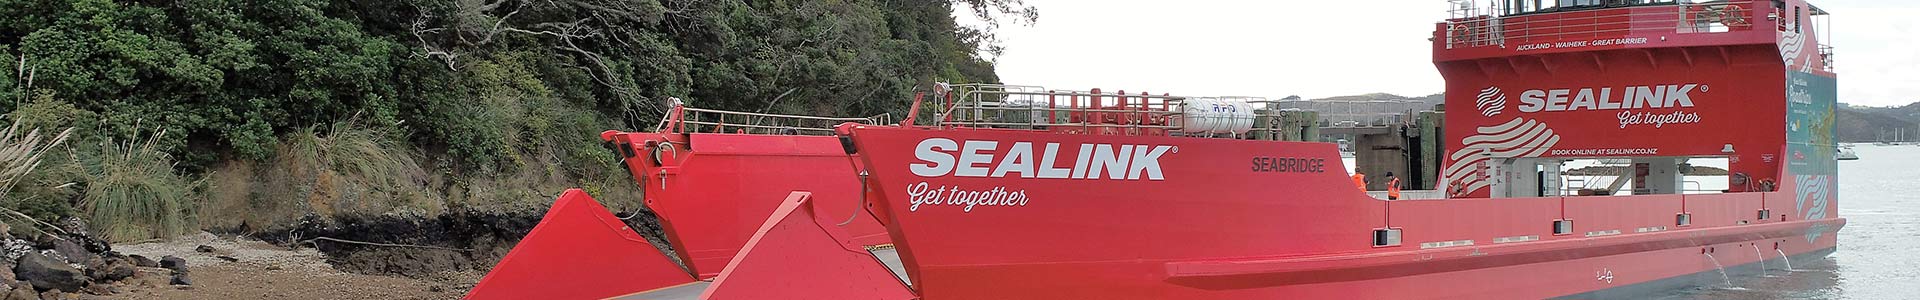 SeaLink Seabridge ferry at Kennedy Point, Waiheke Island